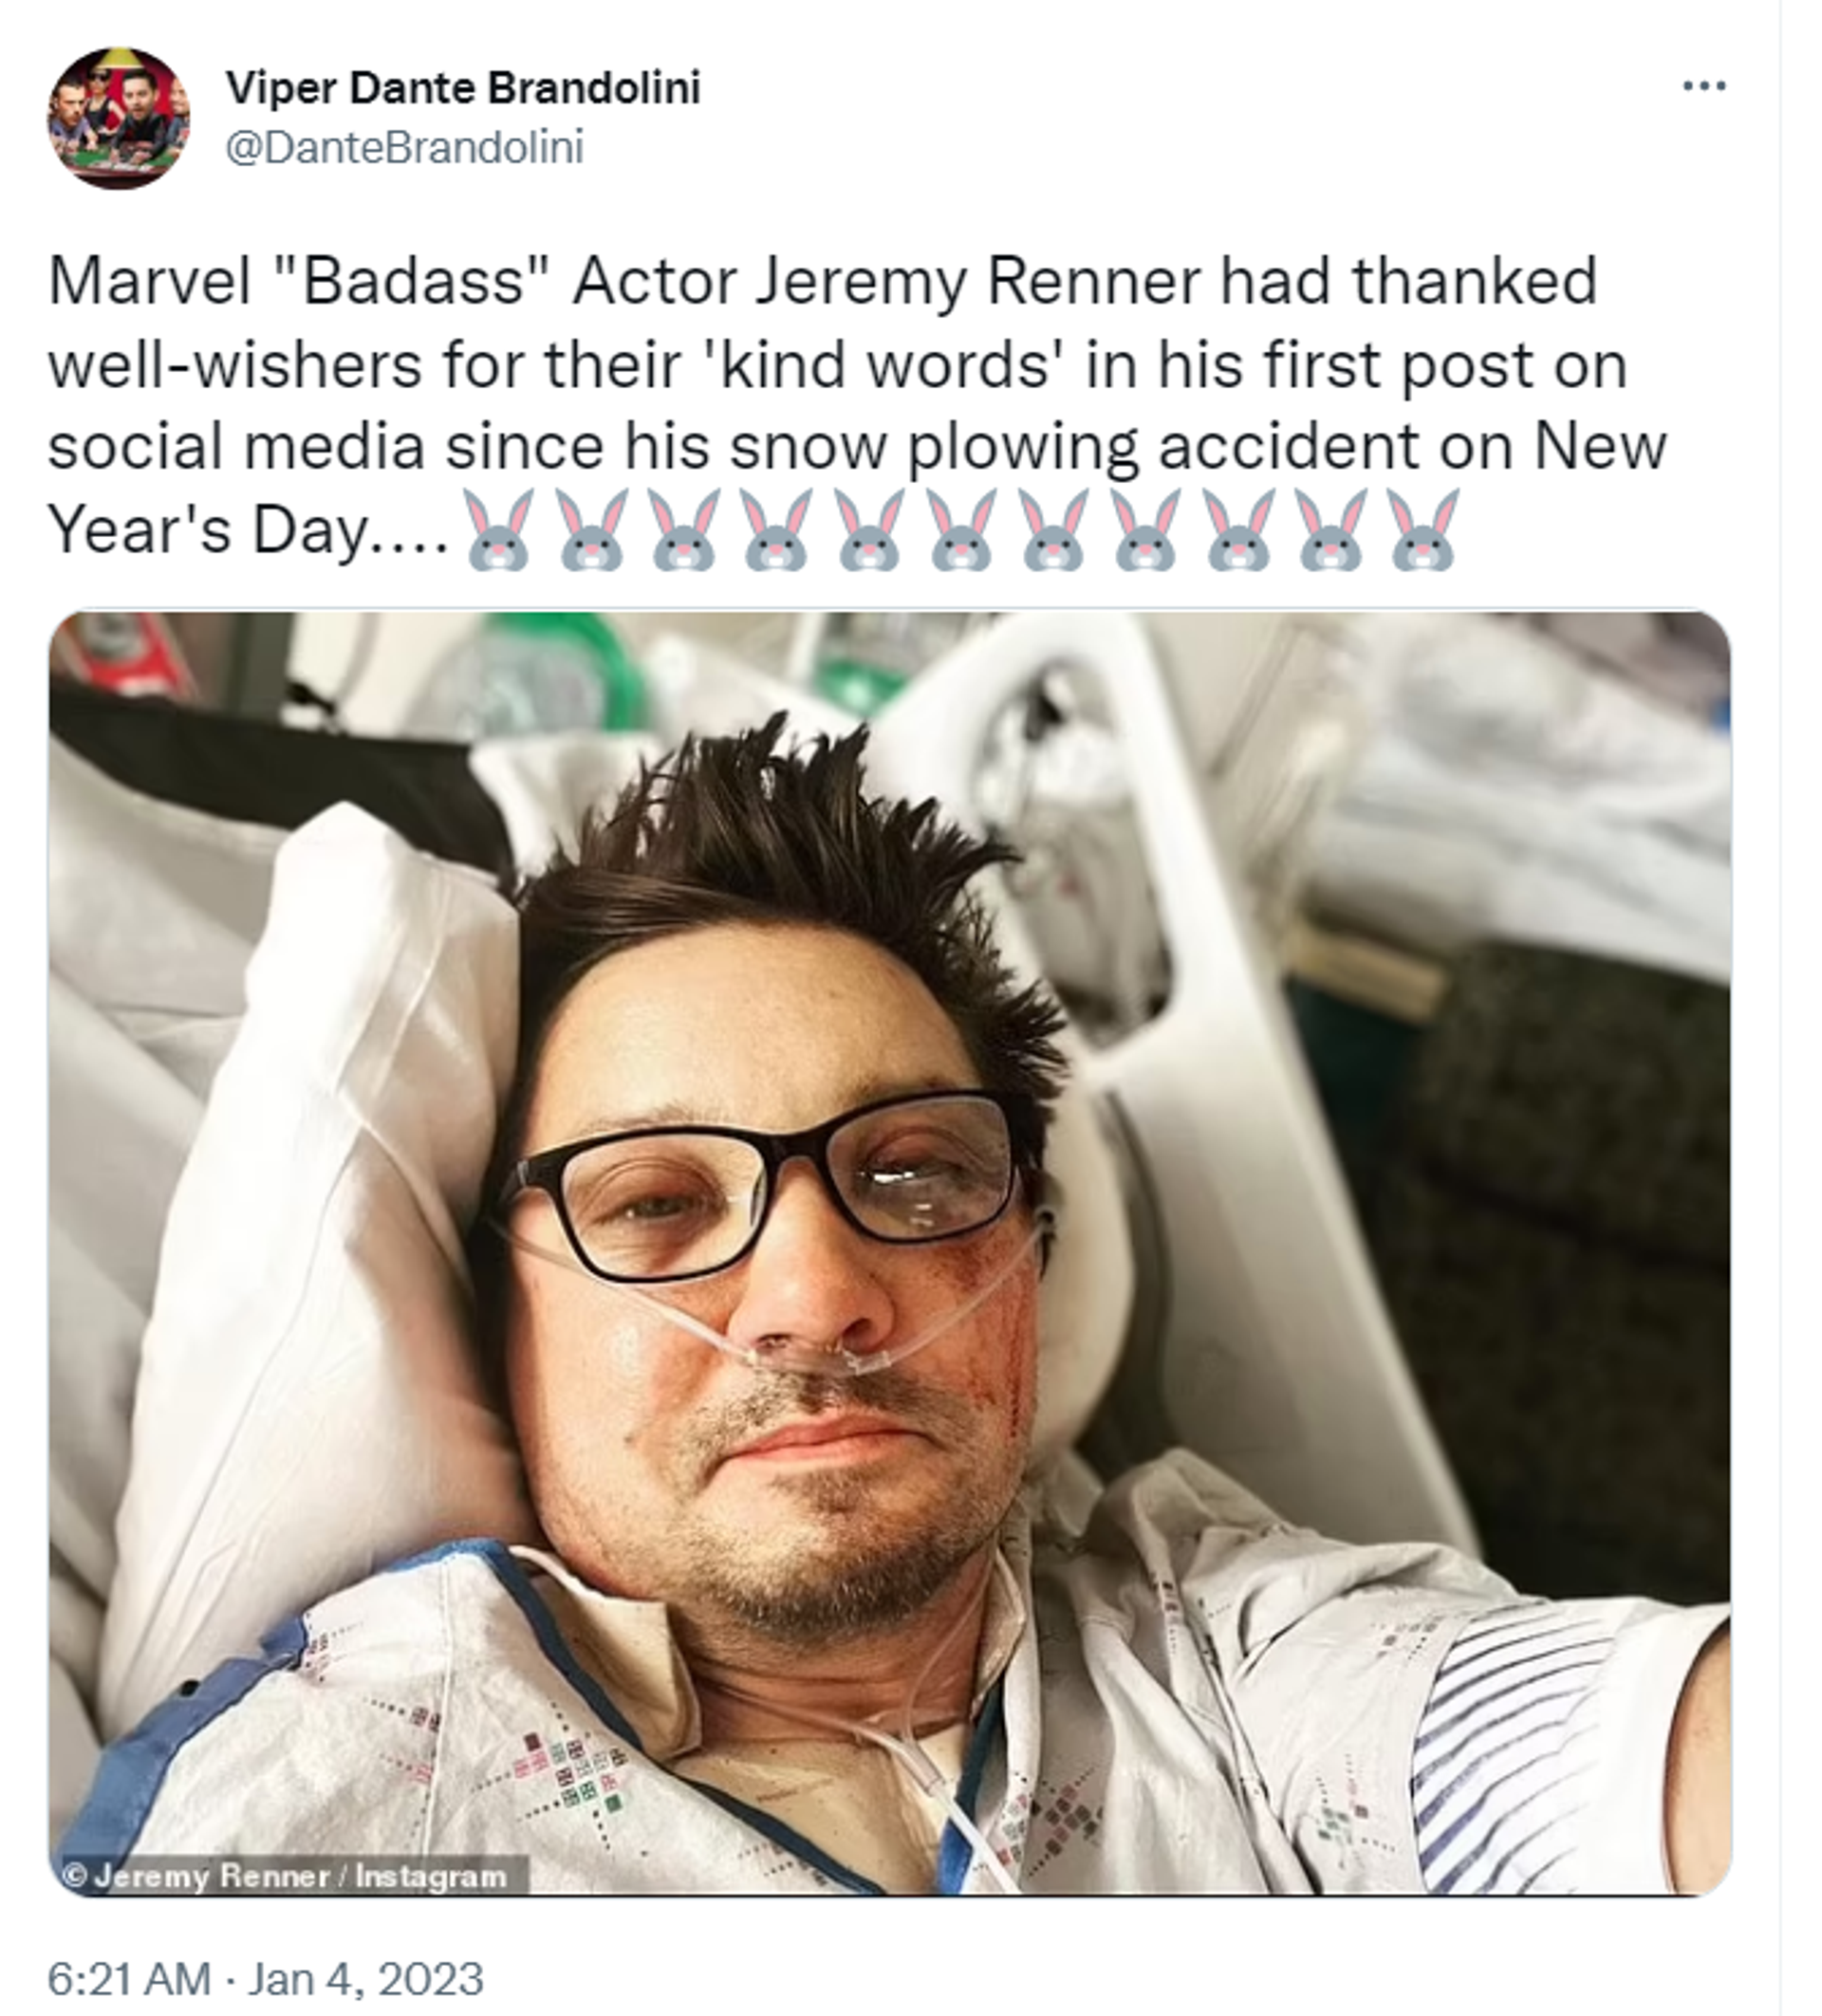 Twitter screenshot featuring social media post of Marvel actor Jeremy Renner. - Sputnik International, 1920, 04.01.2023